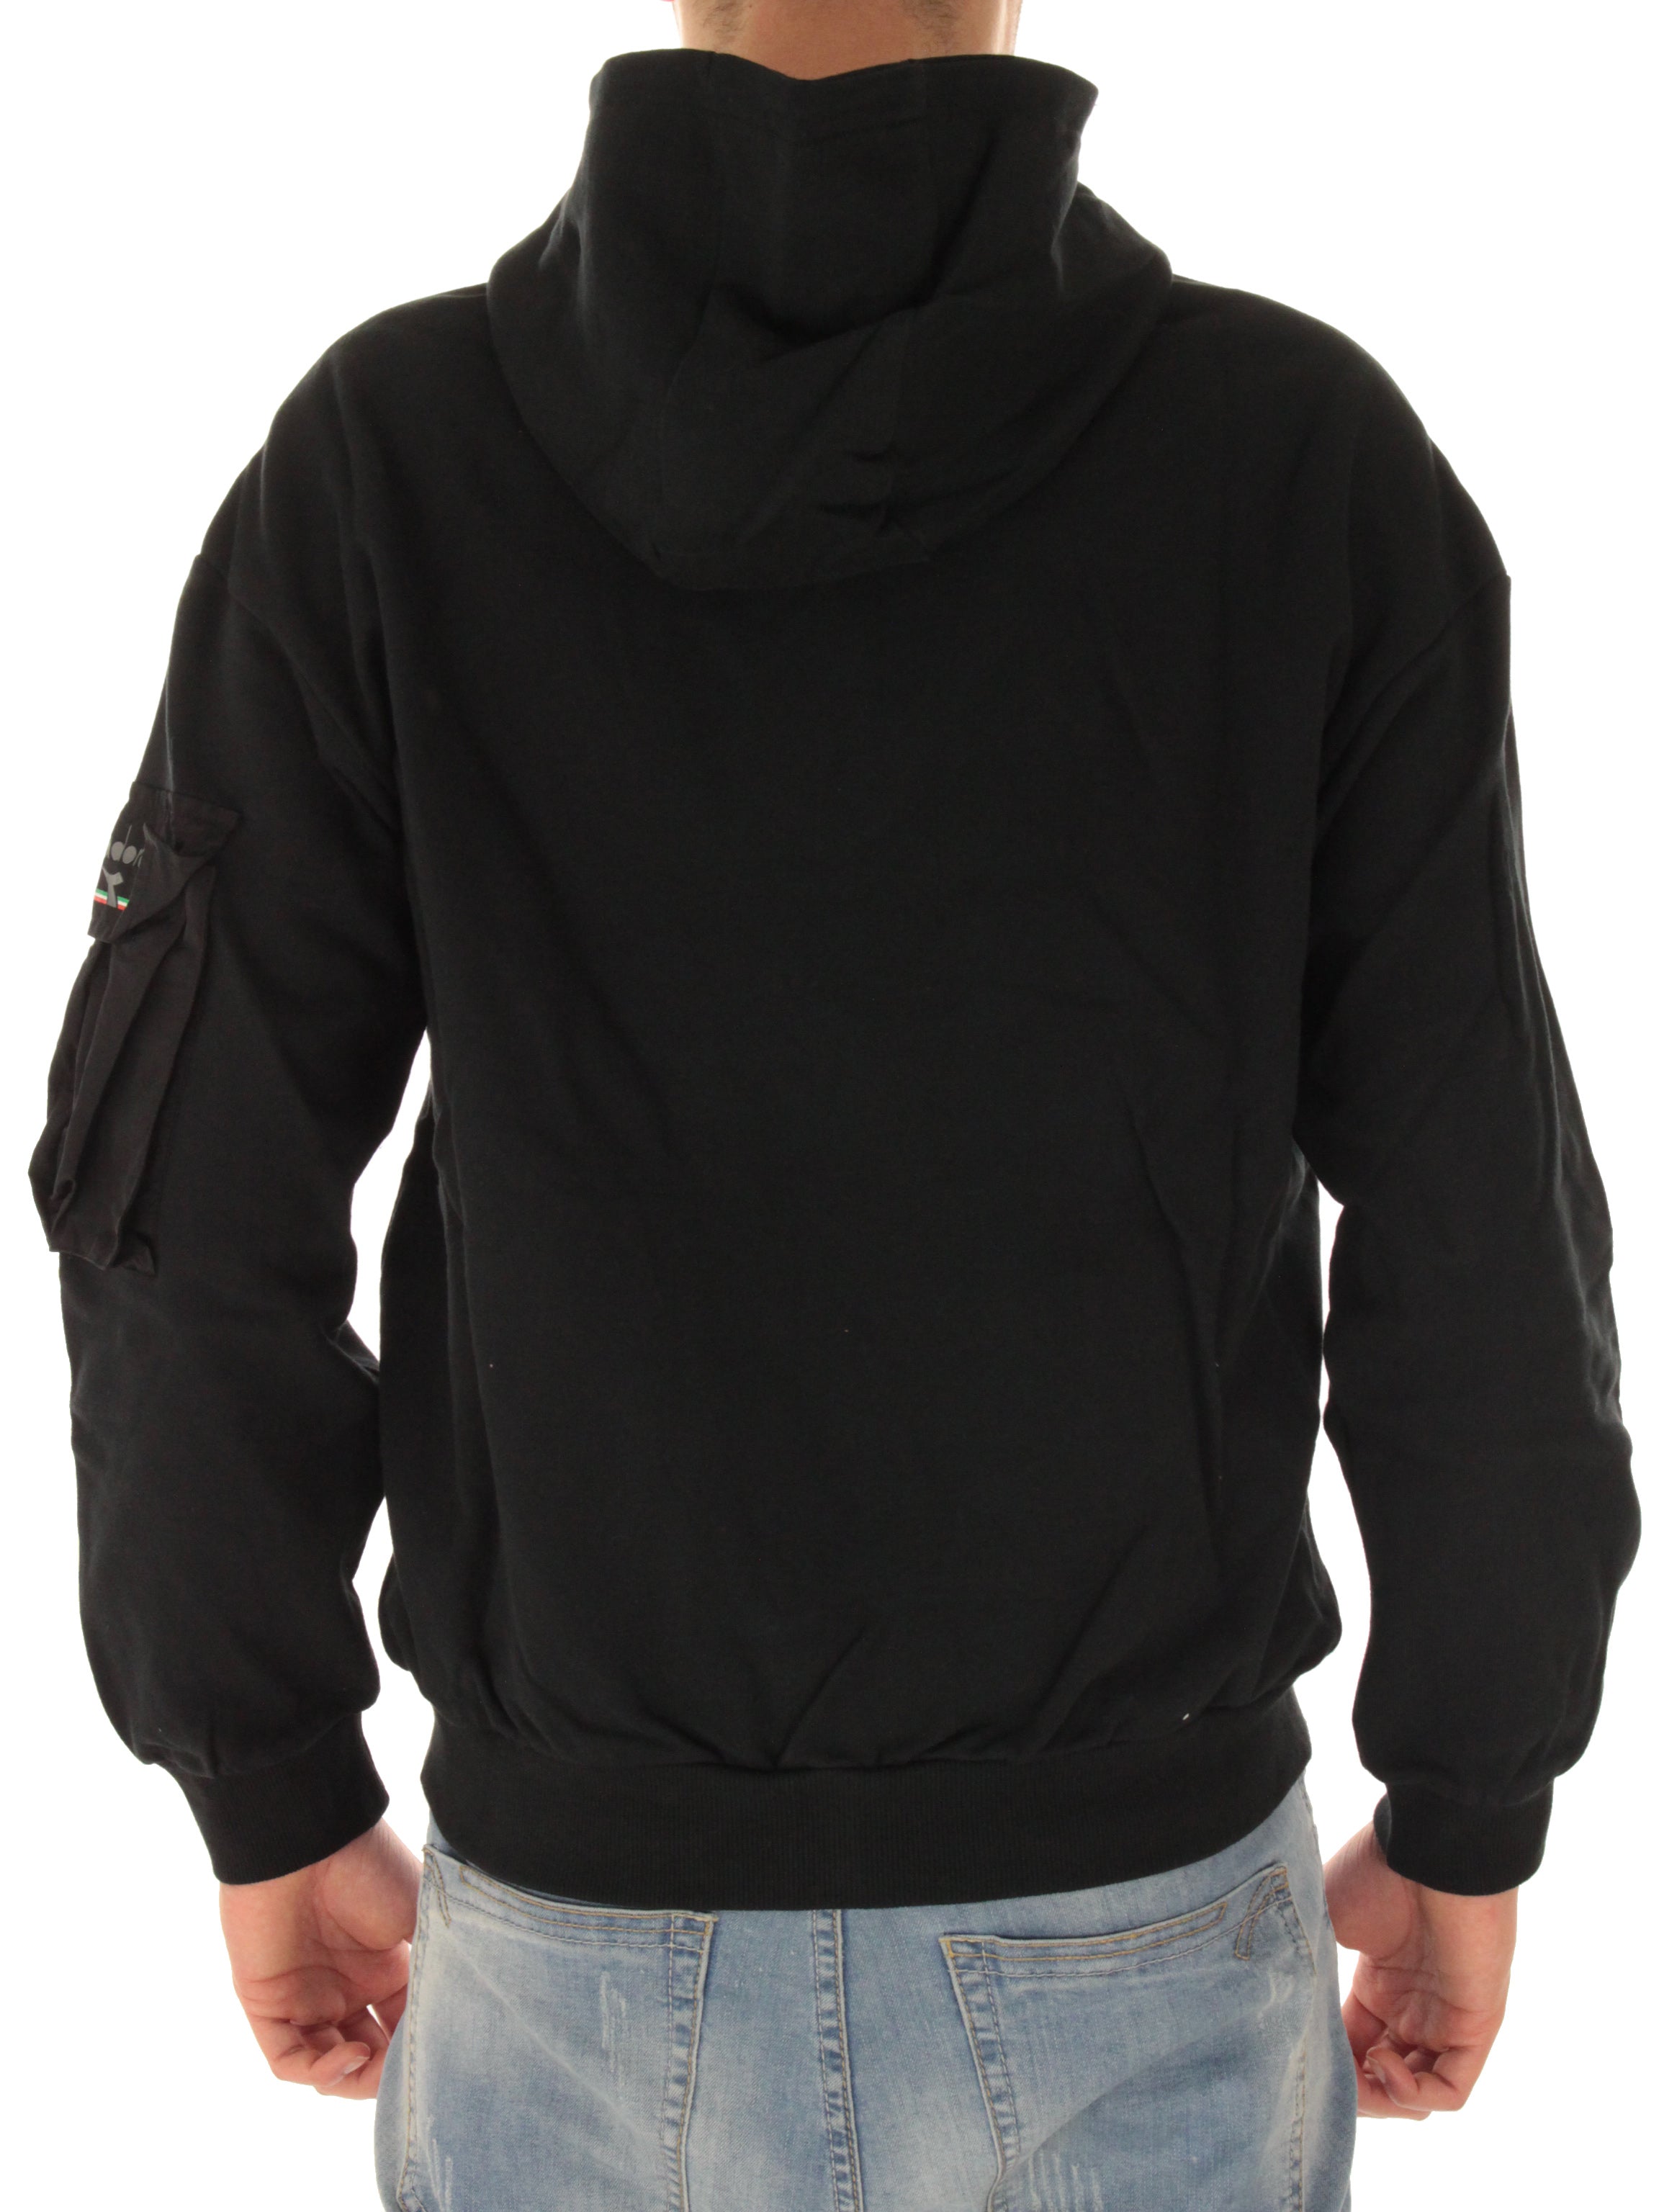 Hoddie Fz Urbanity sweatshirt 502.177468